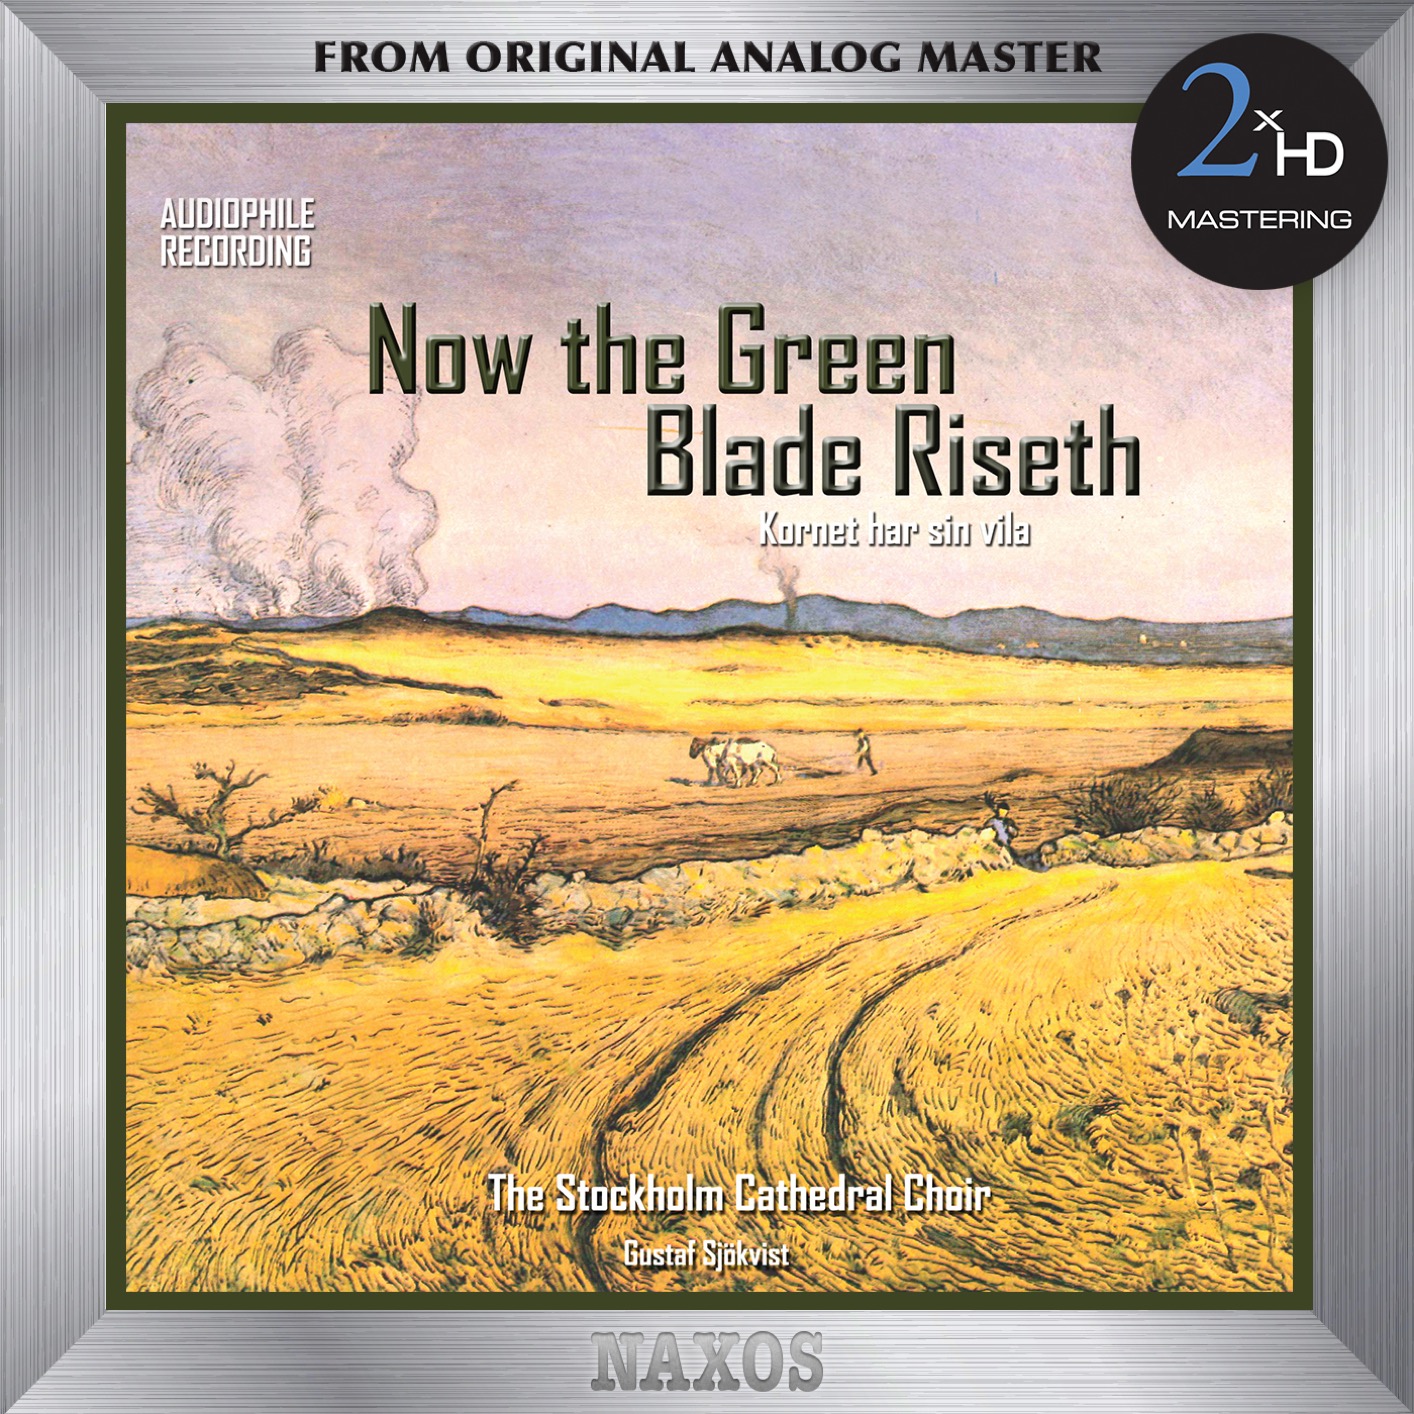 Stockholm Cathedral Choir & Gustaf Sjokvist – Now the Green Blade Riseth (1981/2016) [Official Digital Download 24bit/192kHz]